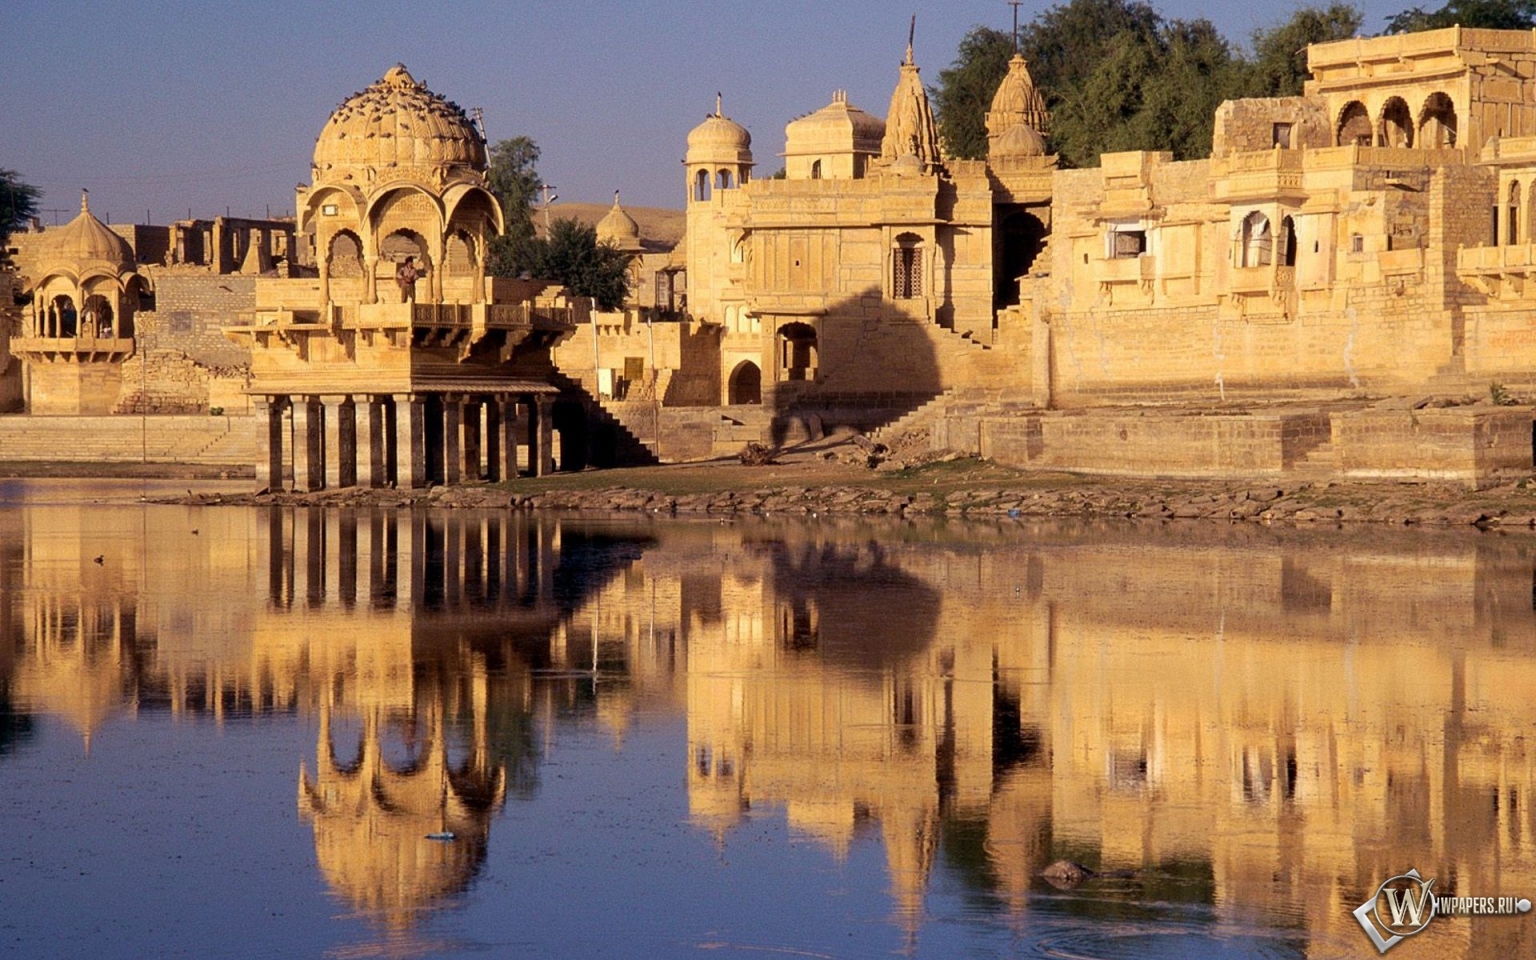 Jaisalmer - Rajasthan - India  1536x960